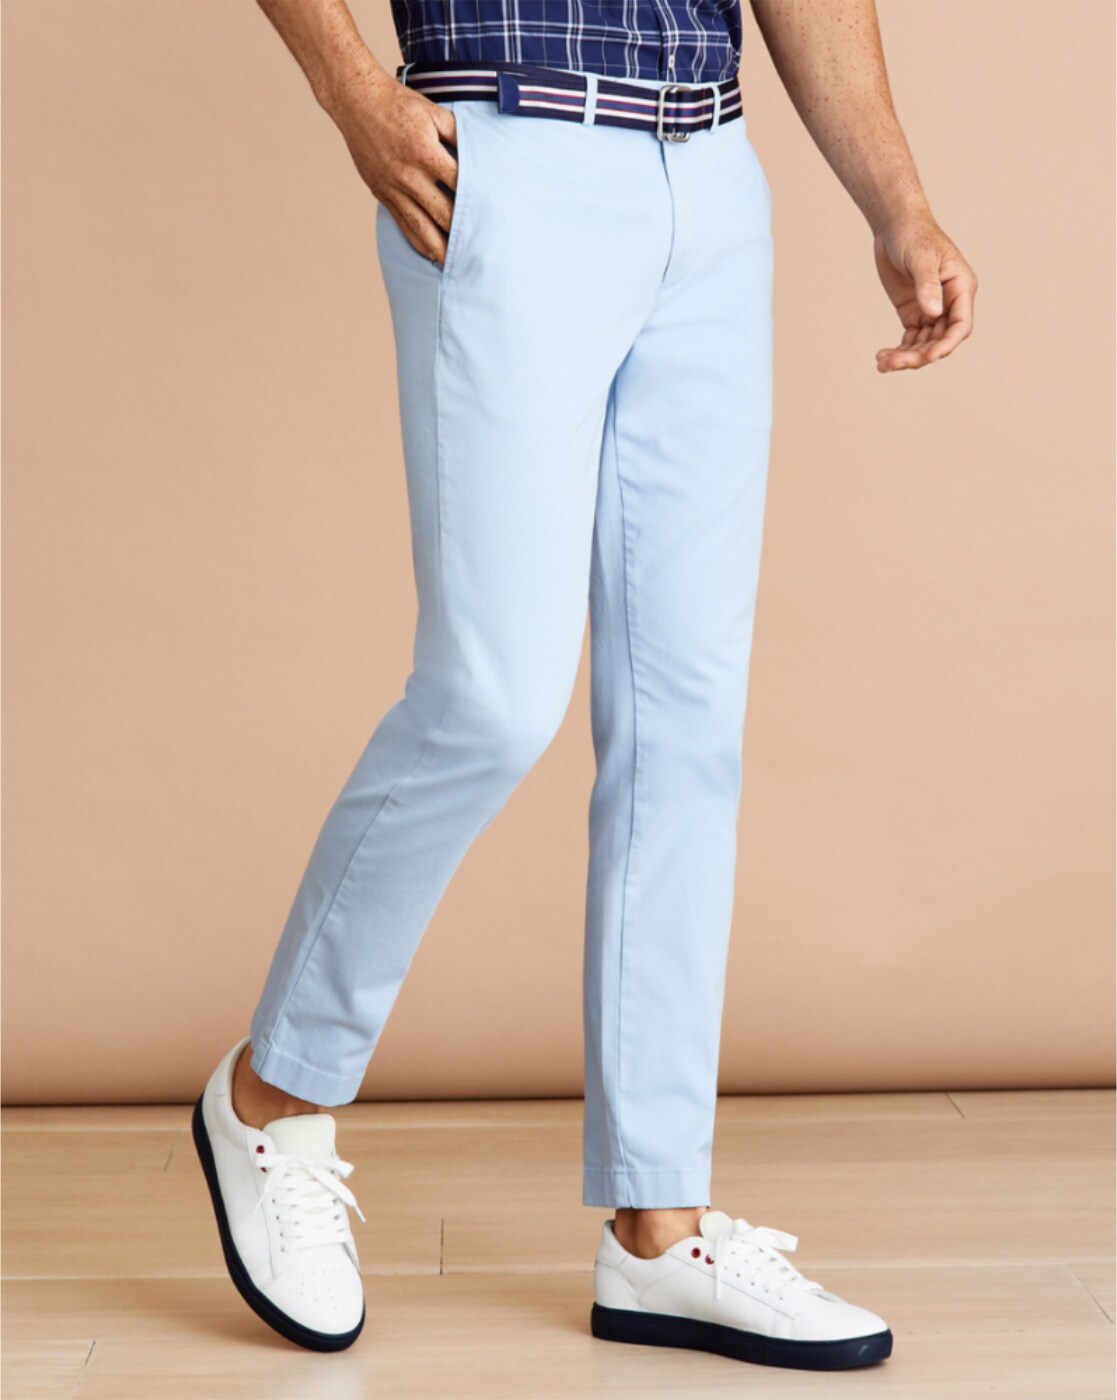 Buy Plus Size Ice Blue high Waist Pants Online For Women  Amydus